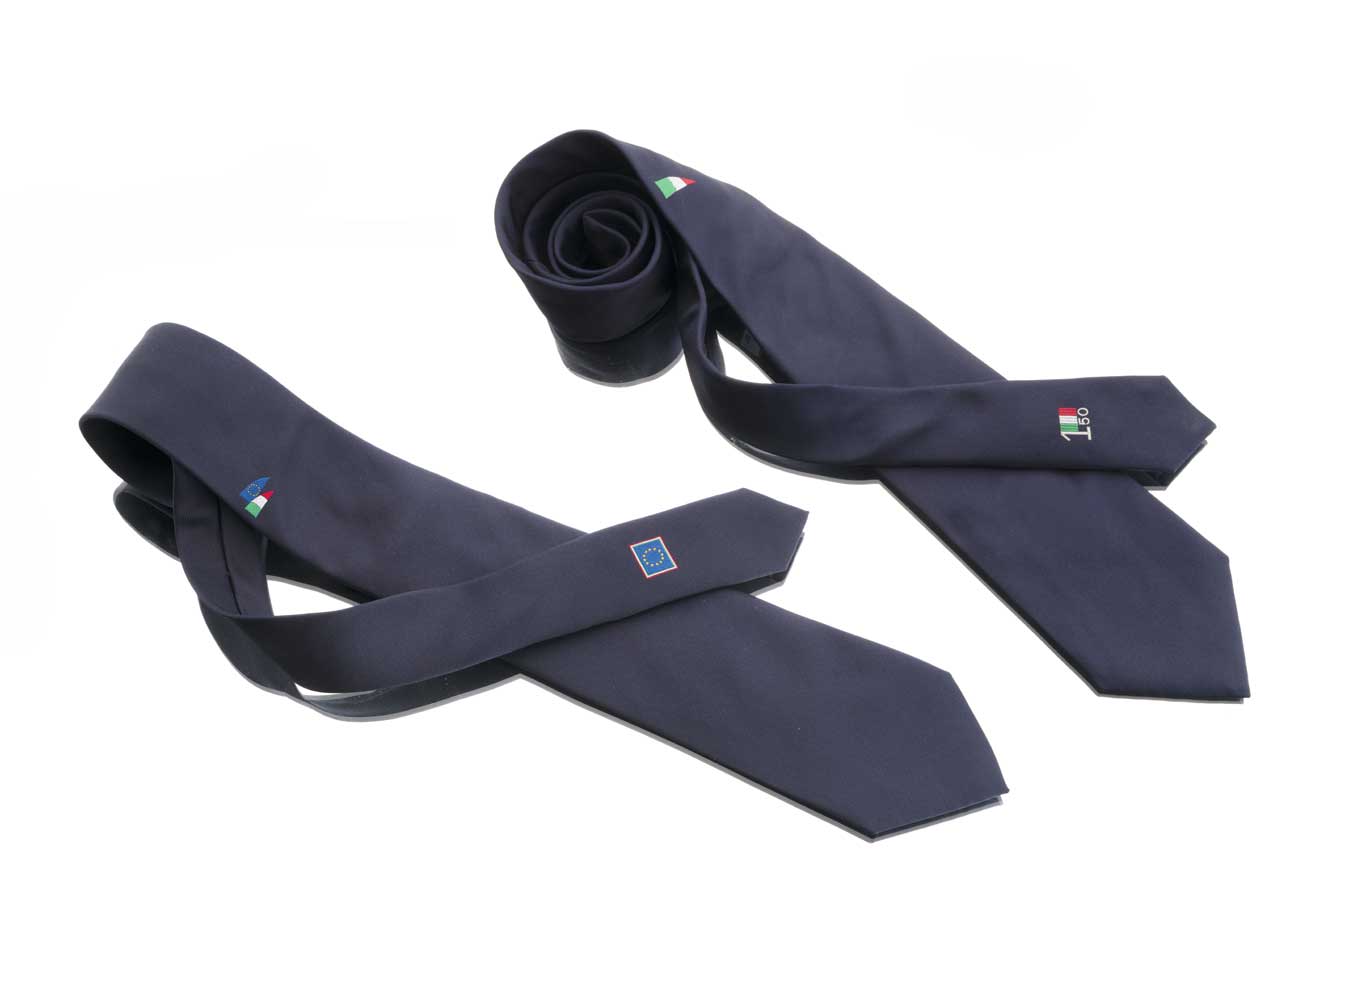 Cravatte limited edition unita italia